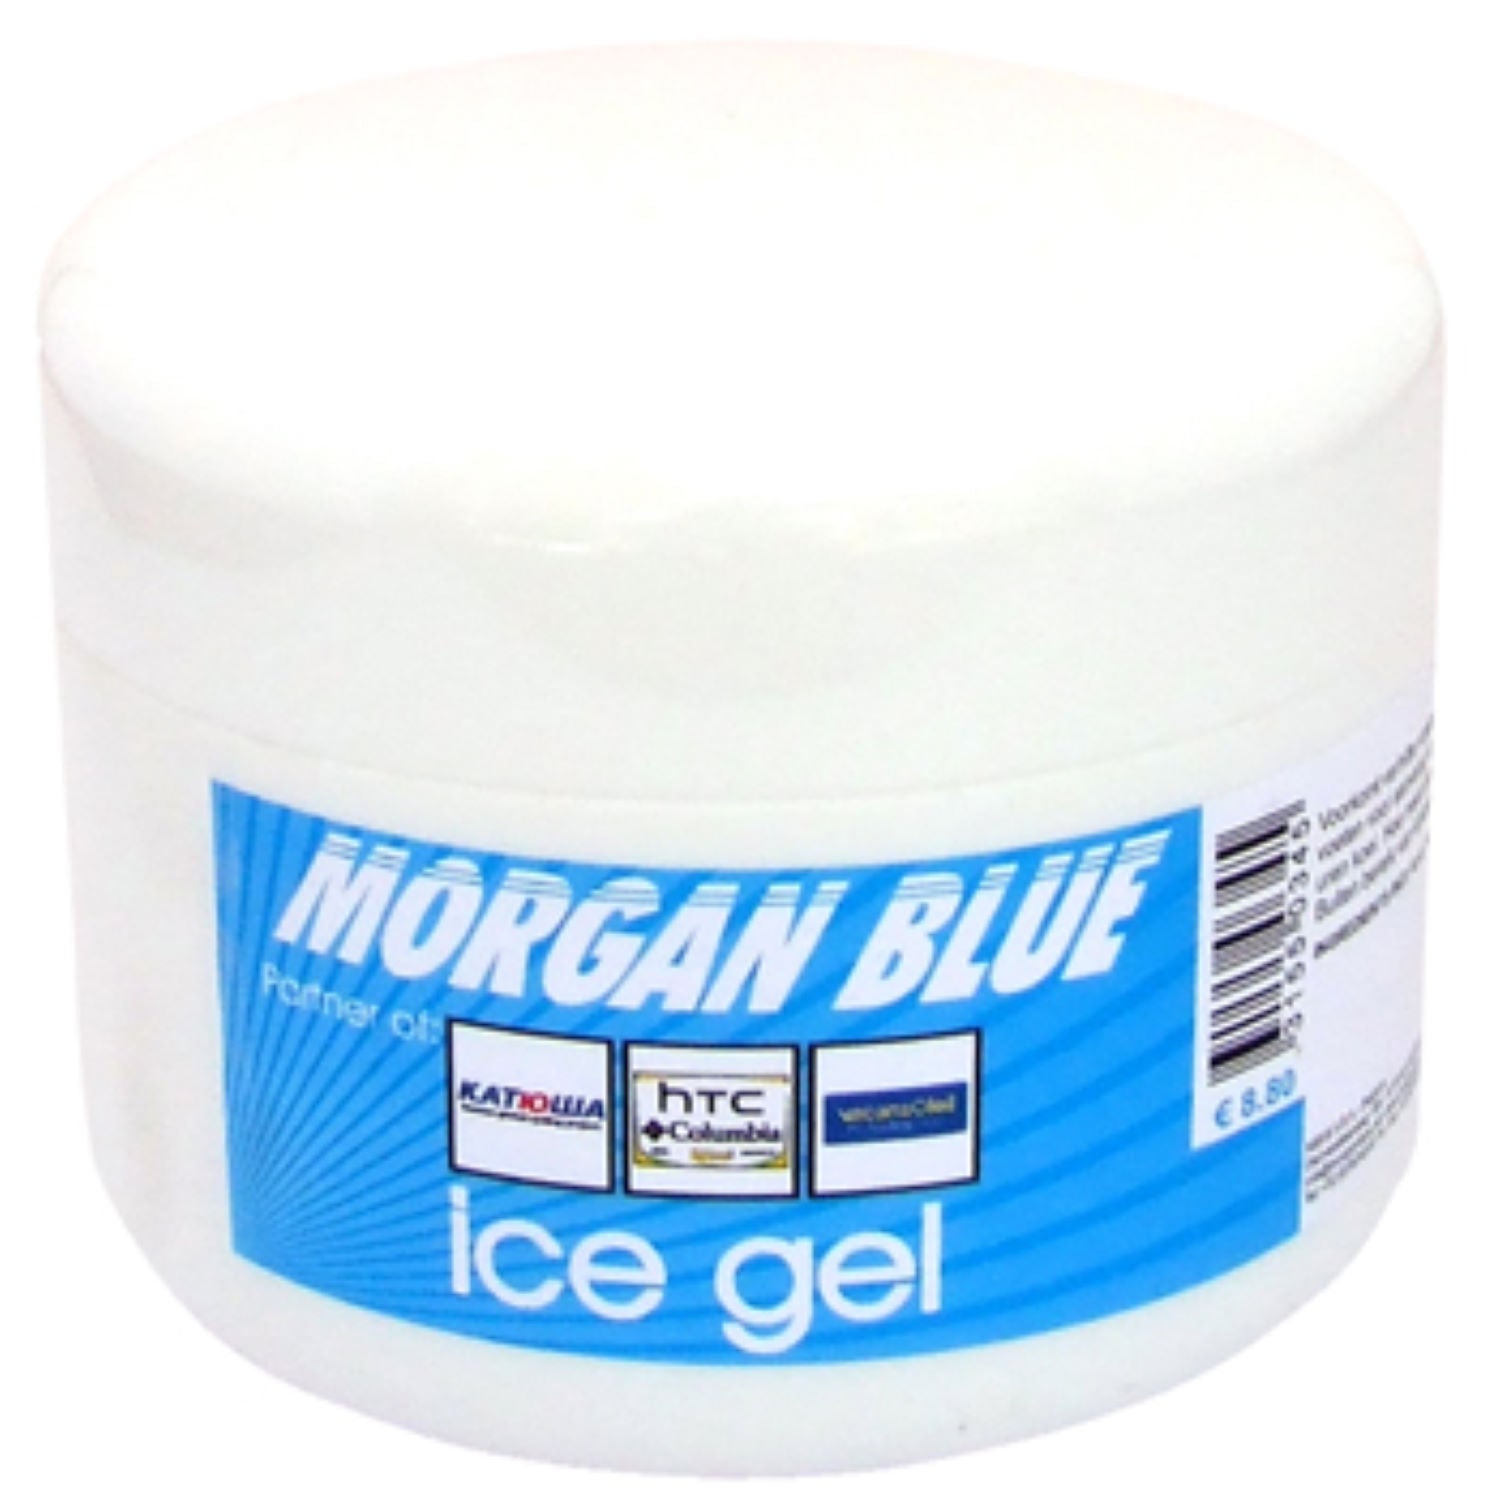 Morgan Blue Ice Gel 200ml